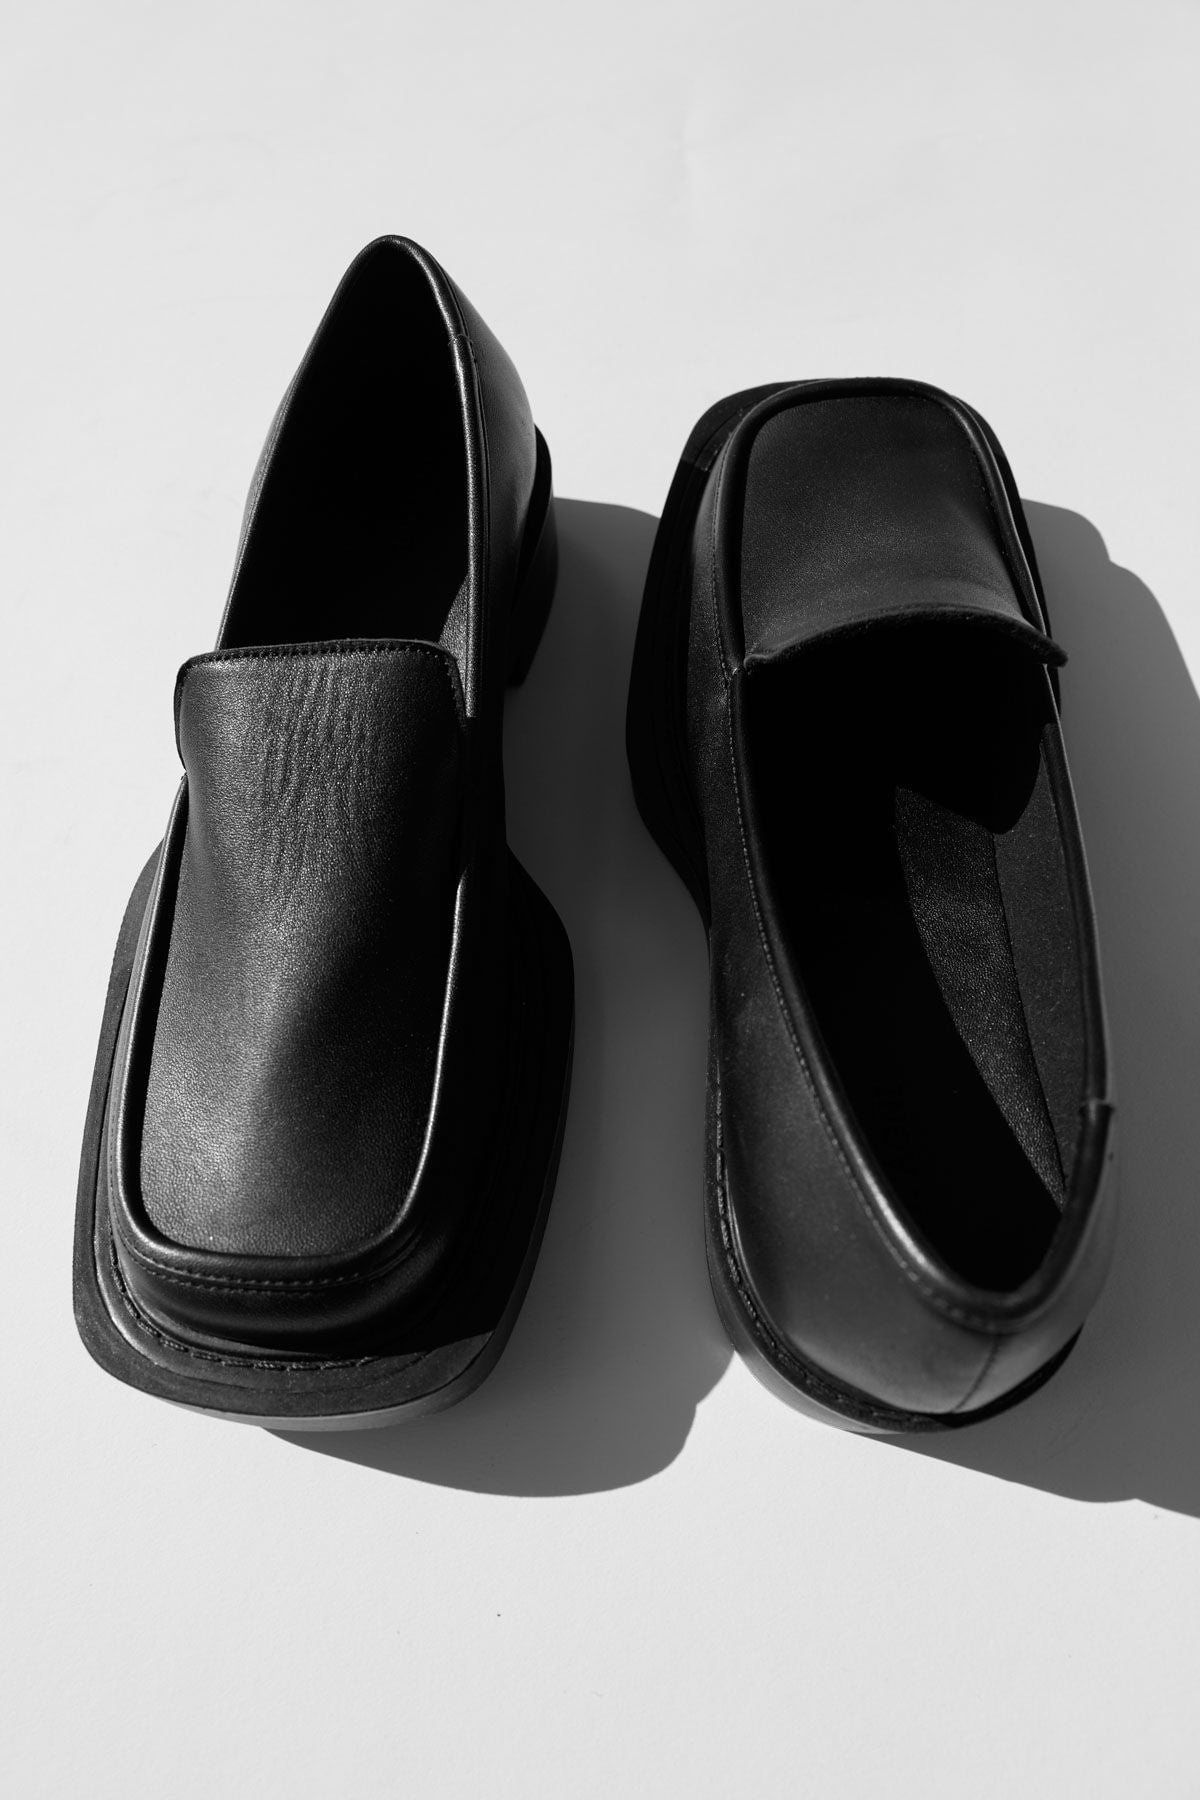 SQUARE LOAFER-BLACK Shoes ST AGNI 